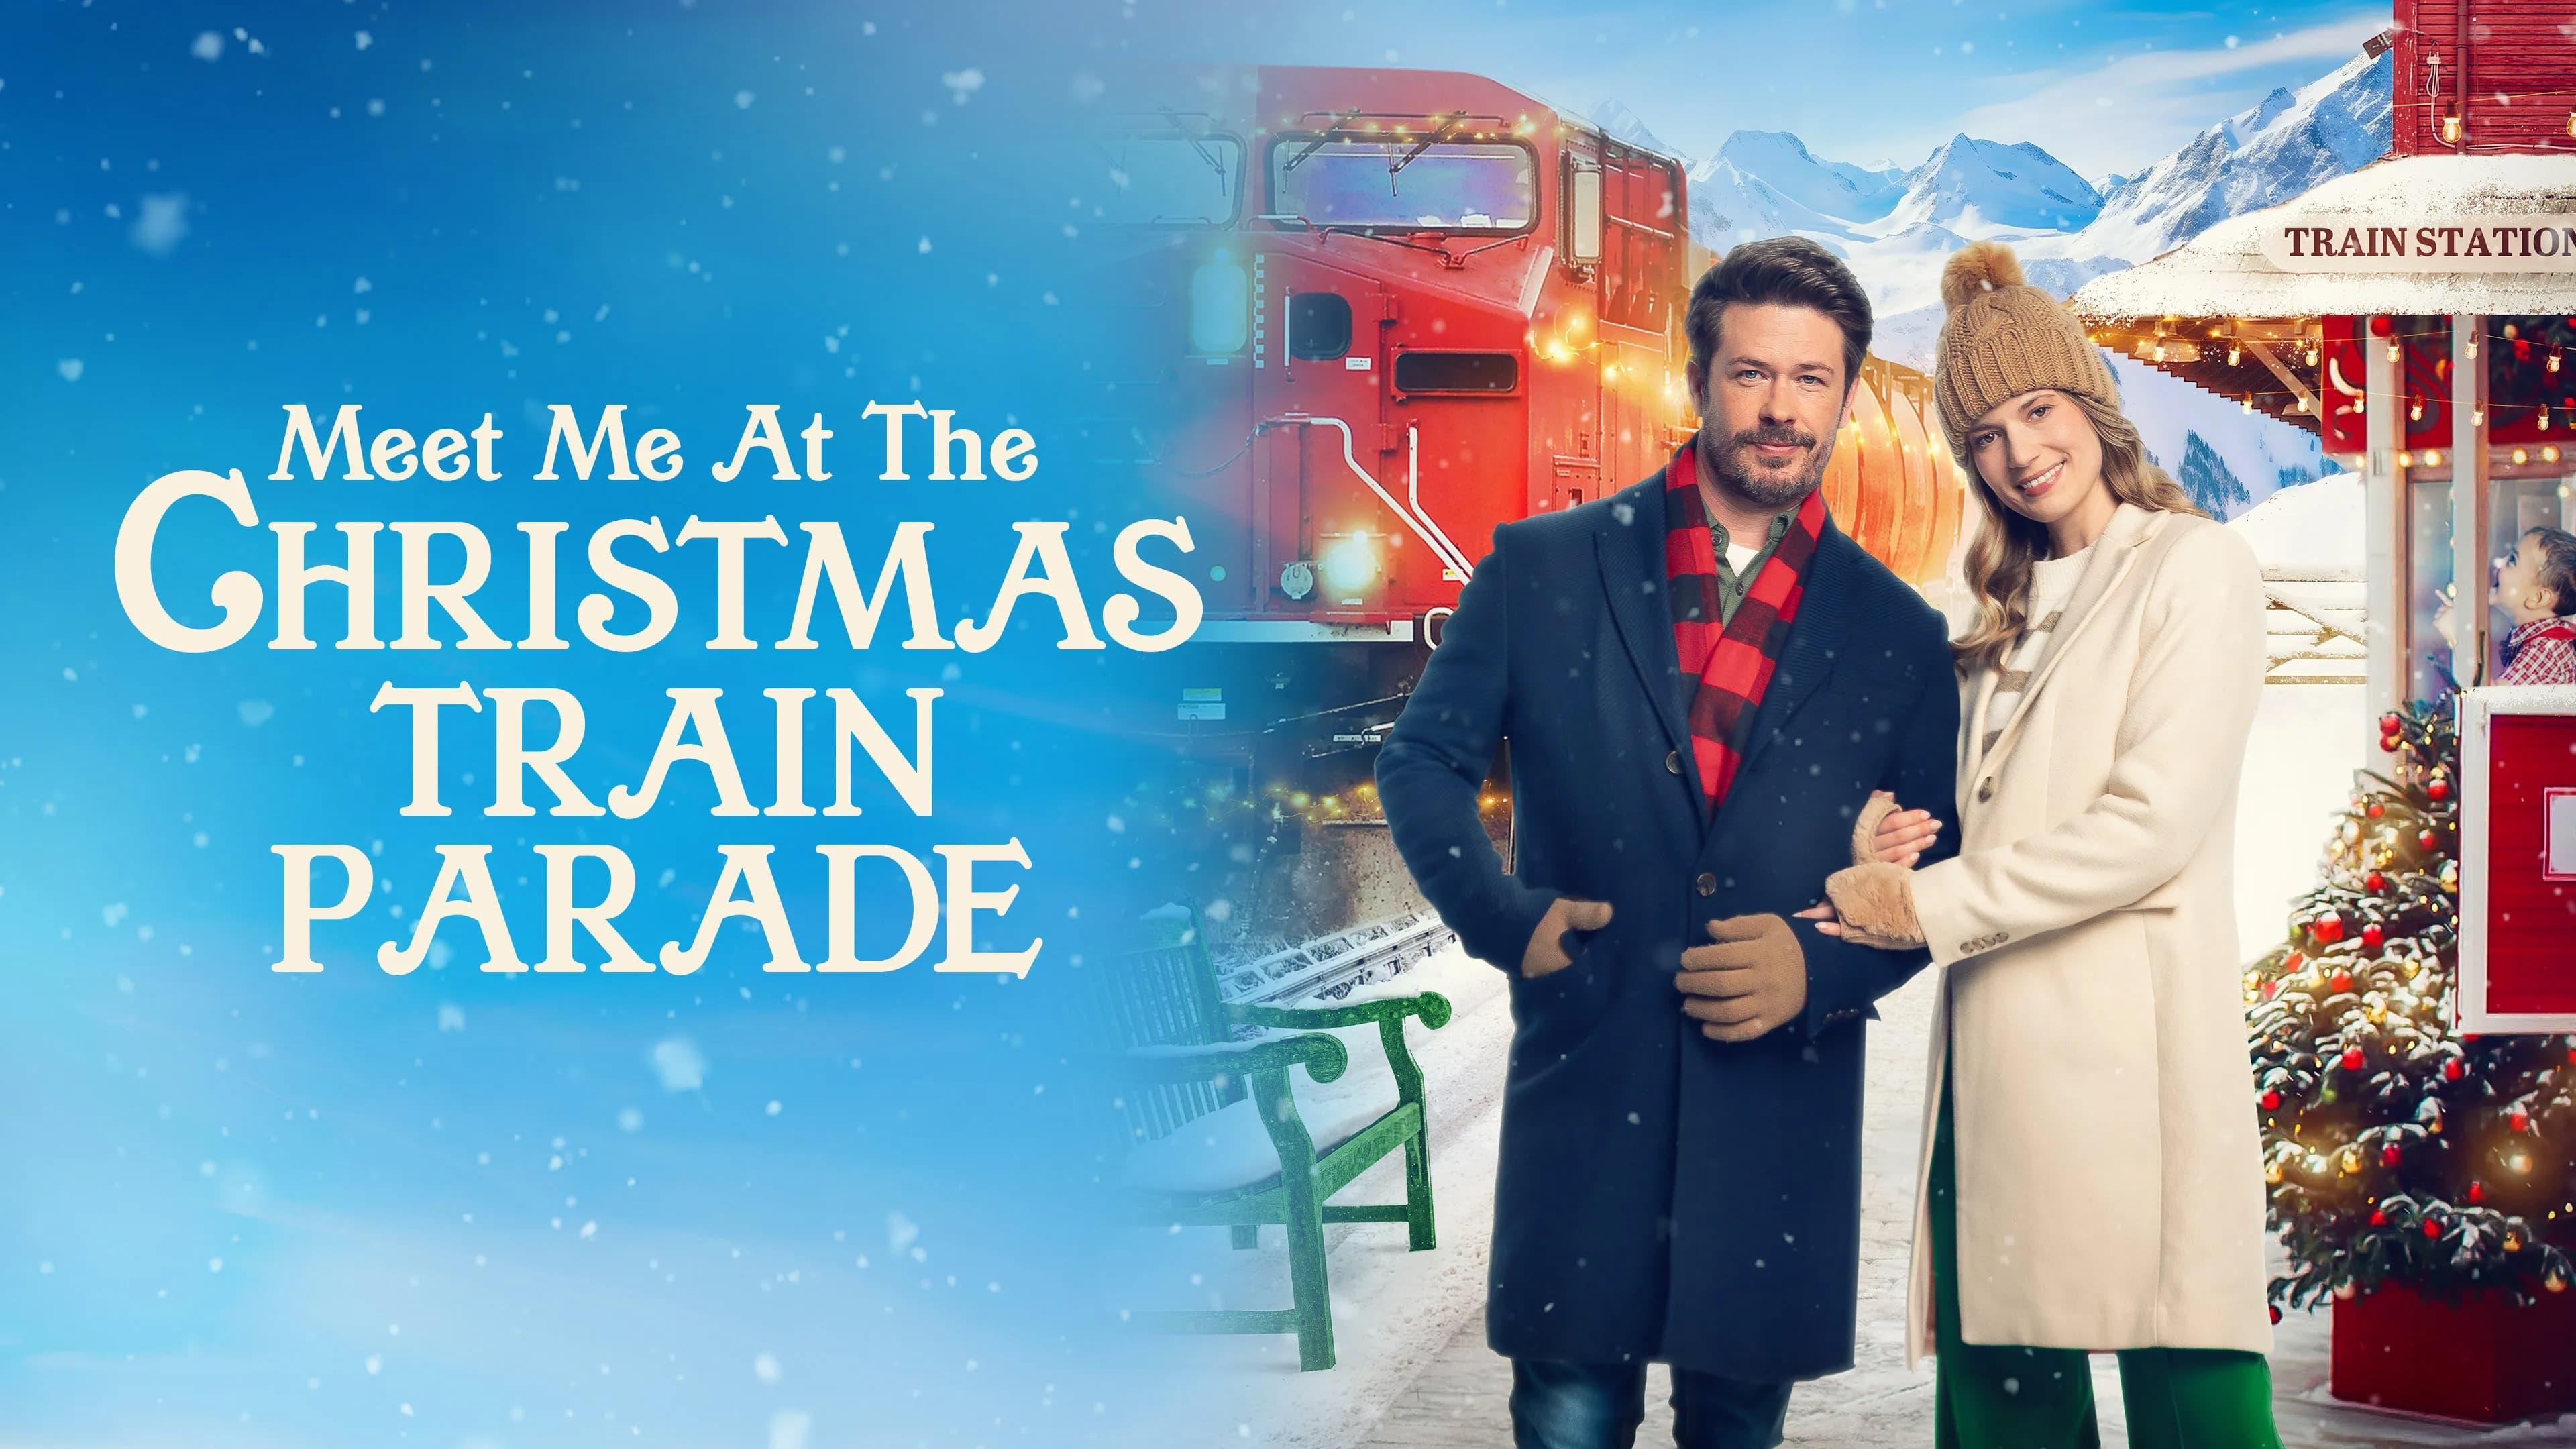 Meet Me at the Christmas Train Parade backdrop